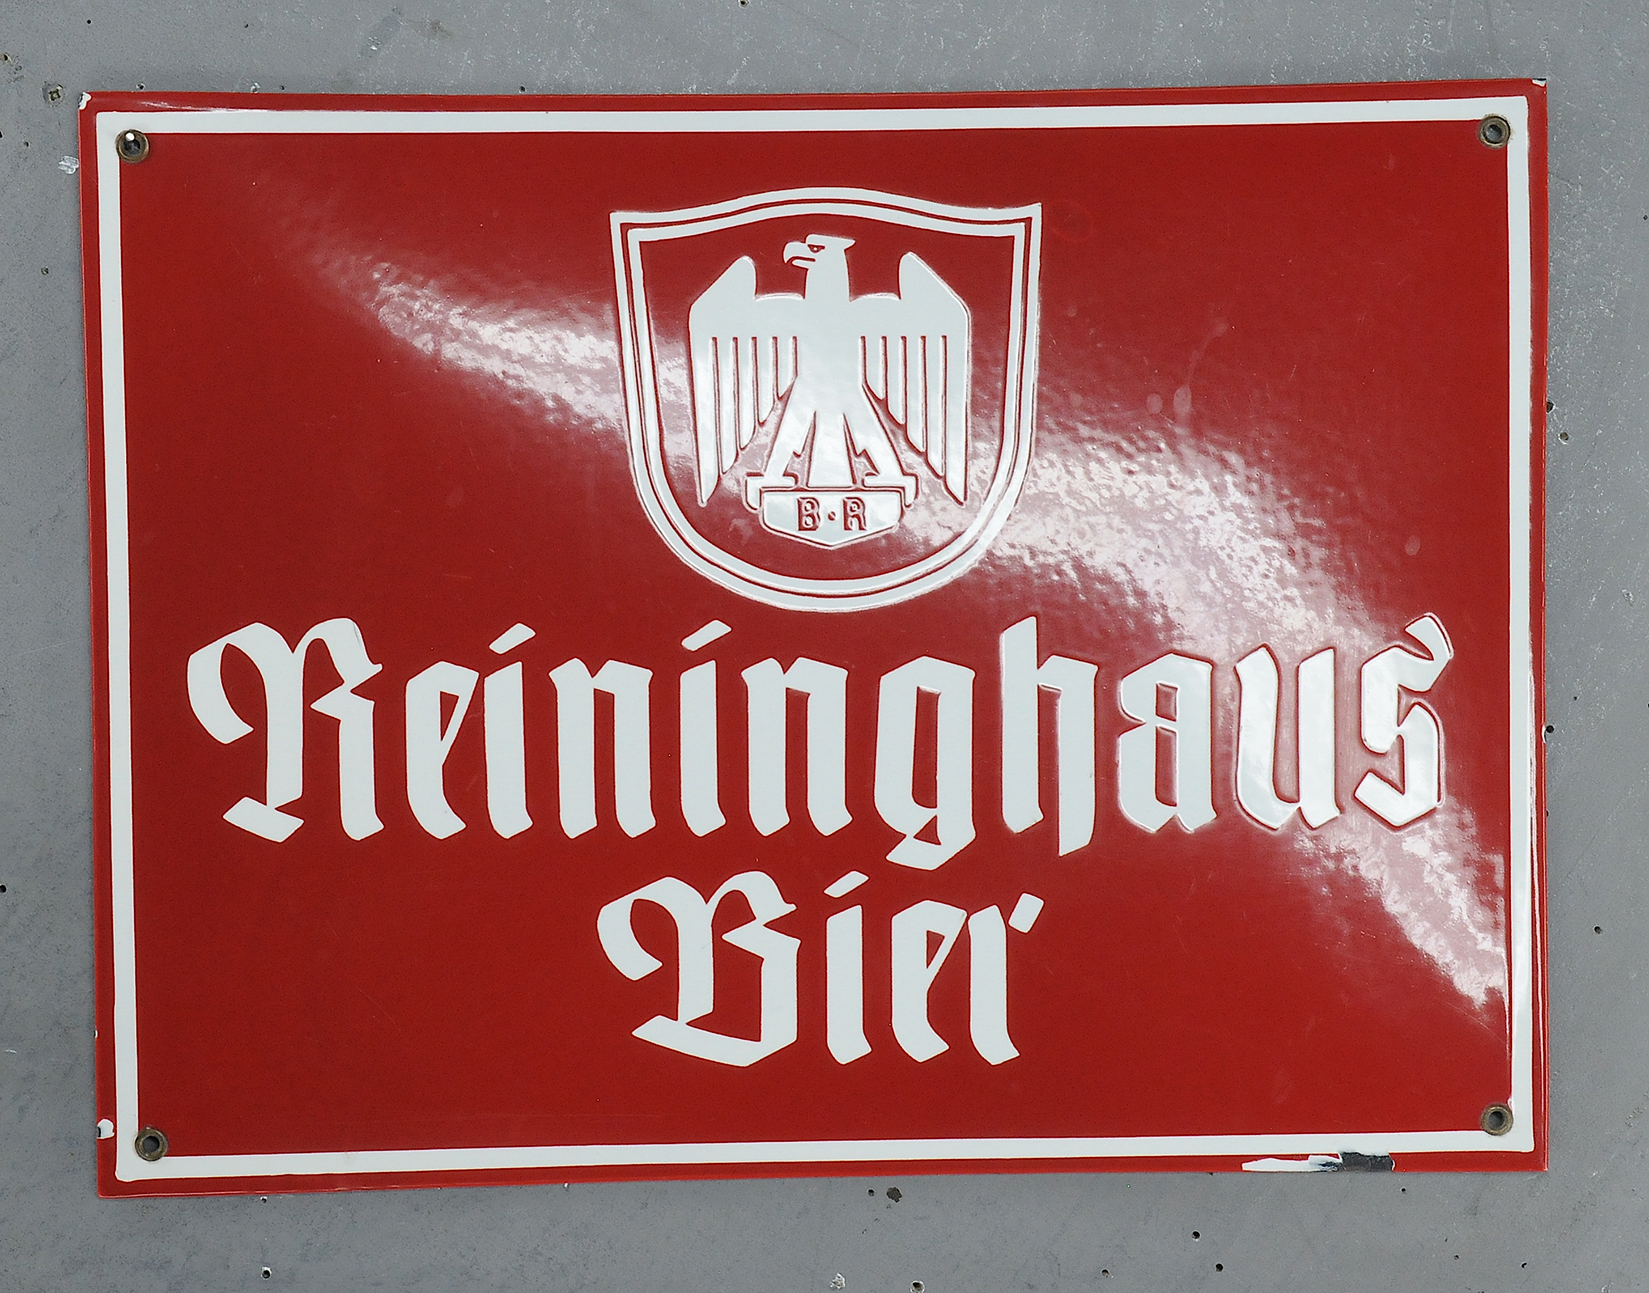 Reininghaus Bier - Image 3 of 3